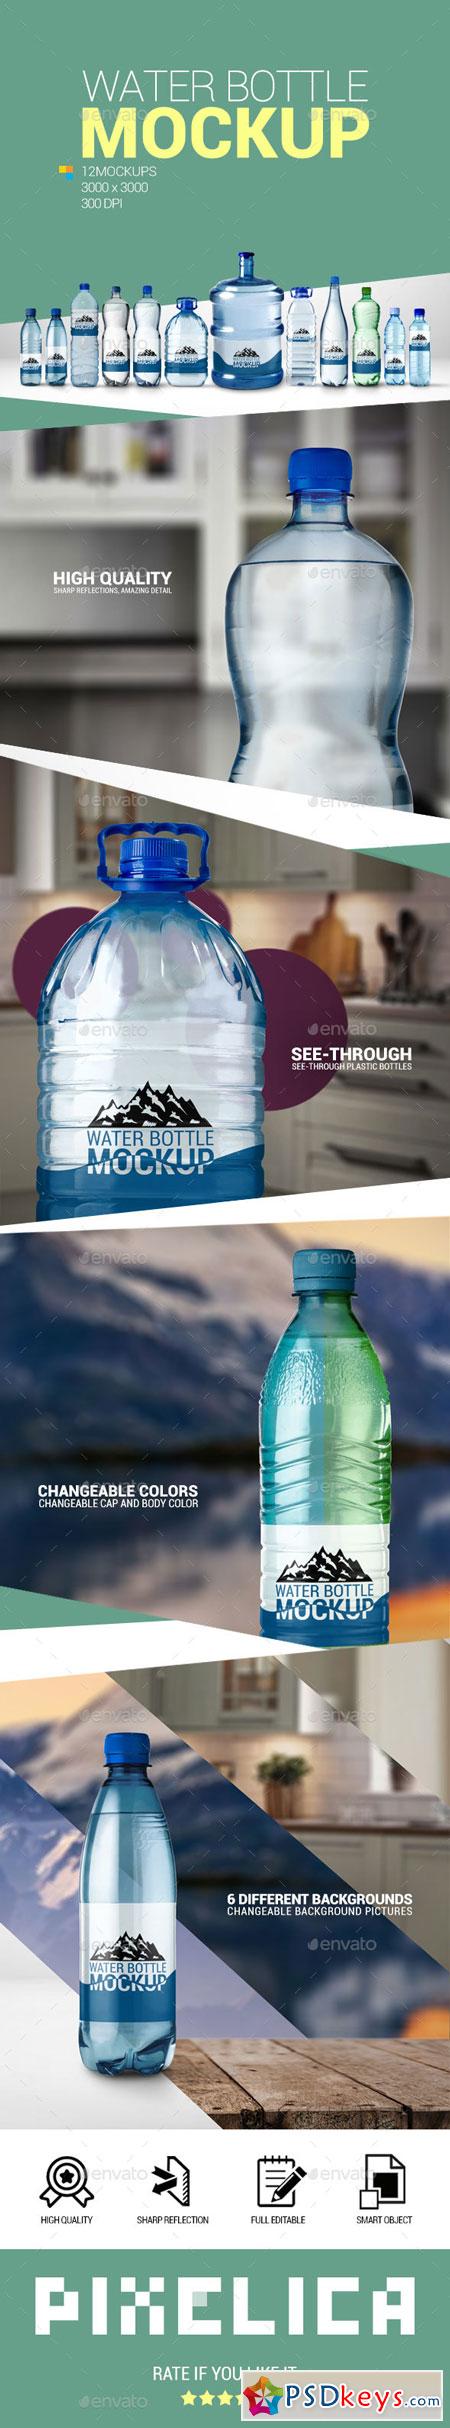 Water Bottle Mockup Pack 2 22538766